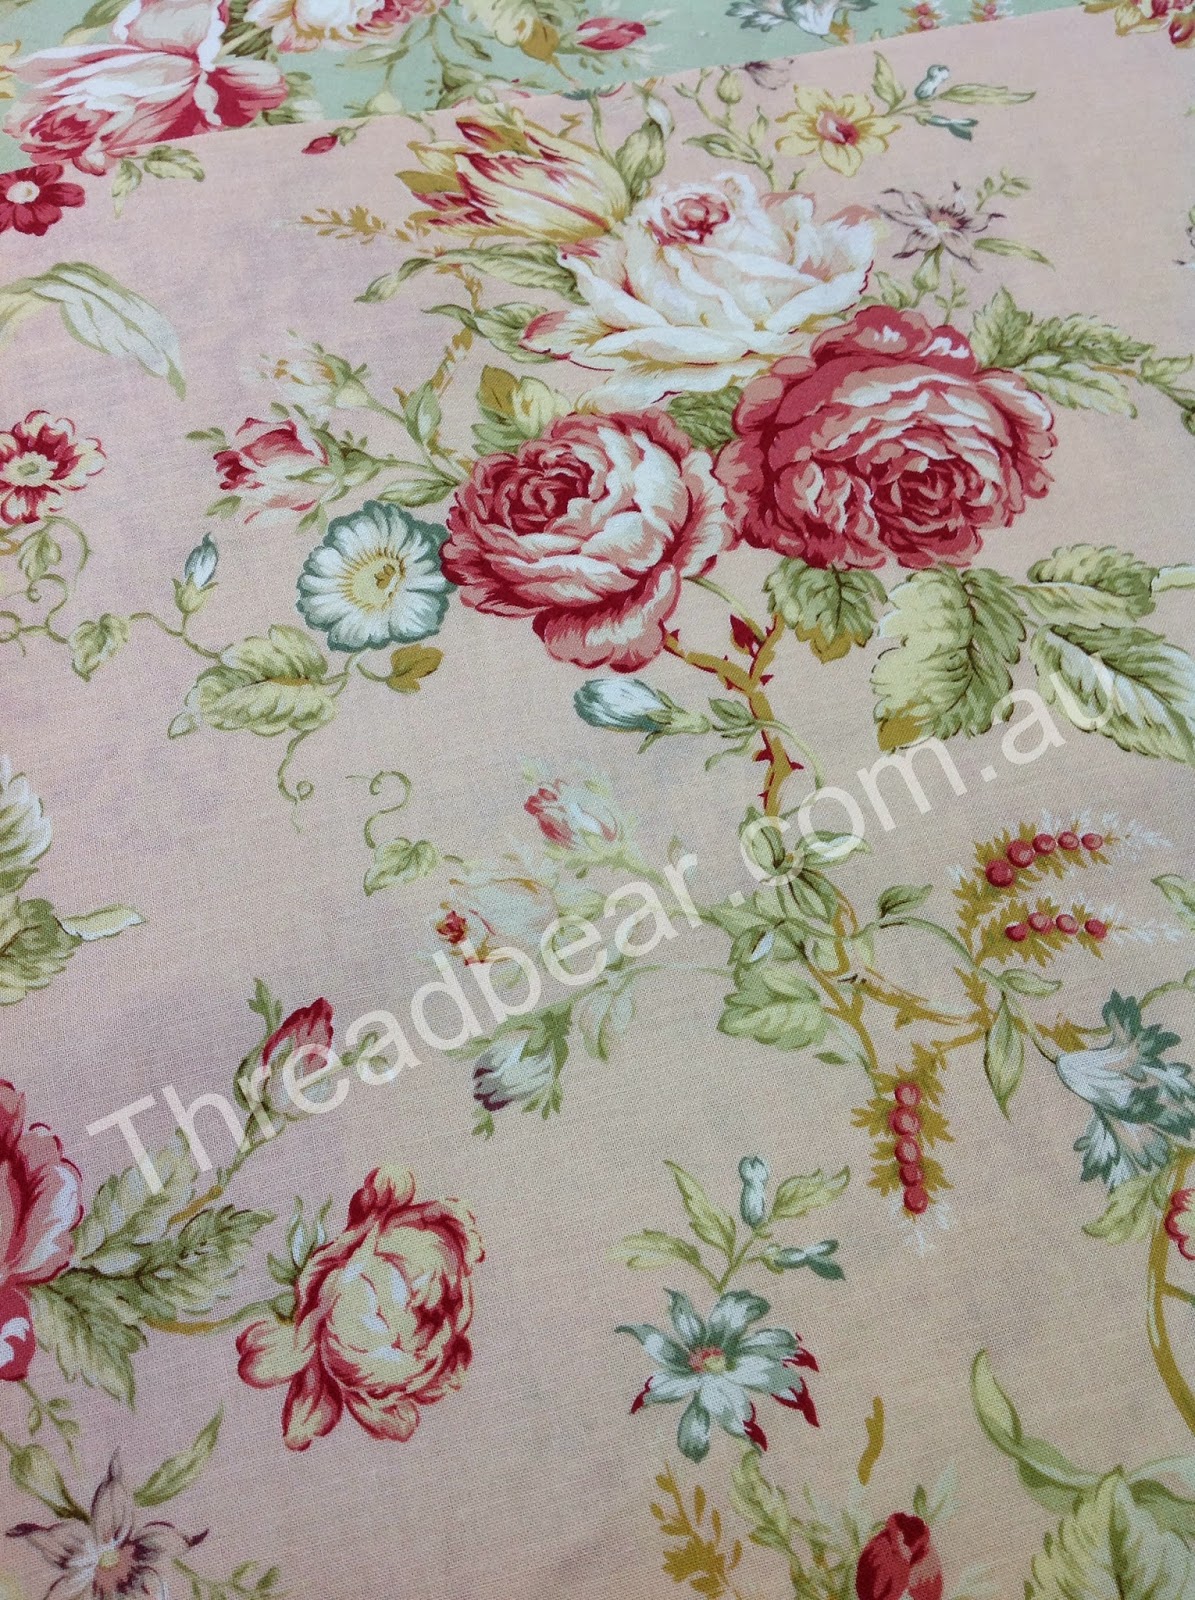 Vintage Floral Print Background In The Large